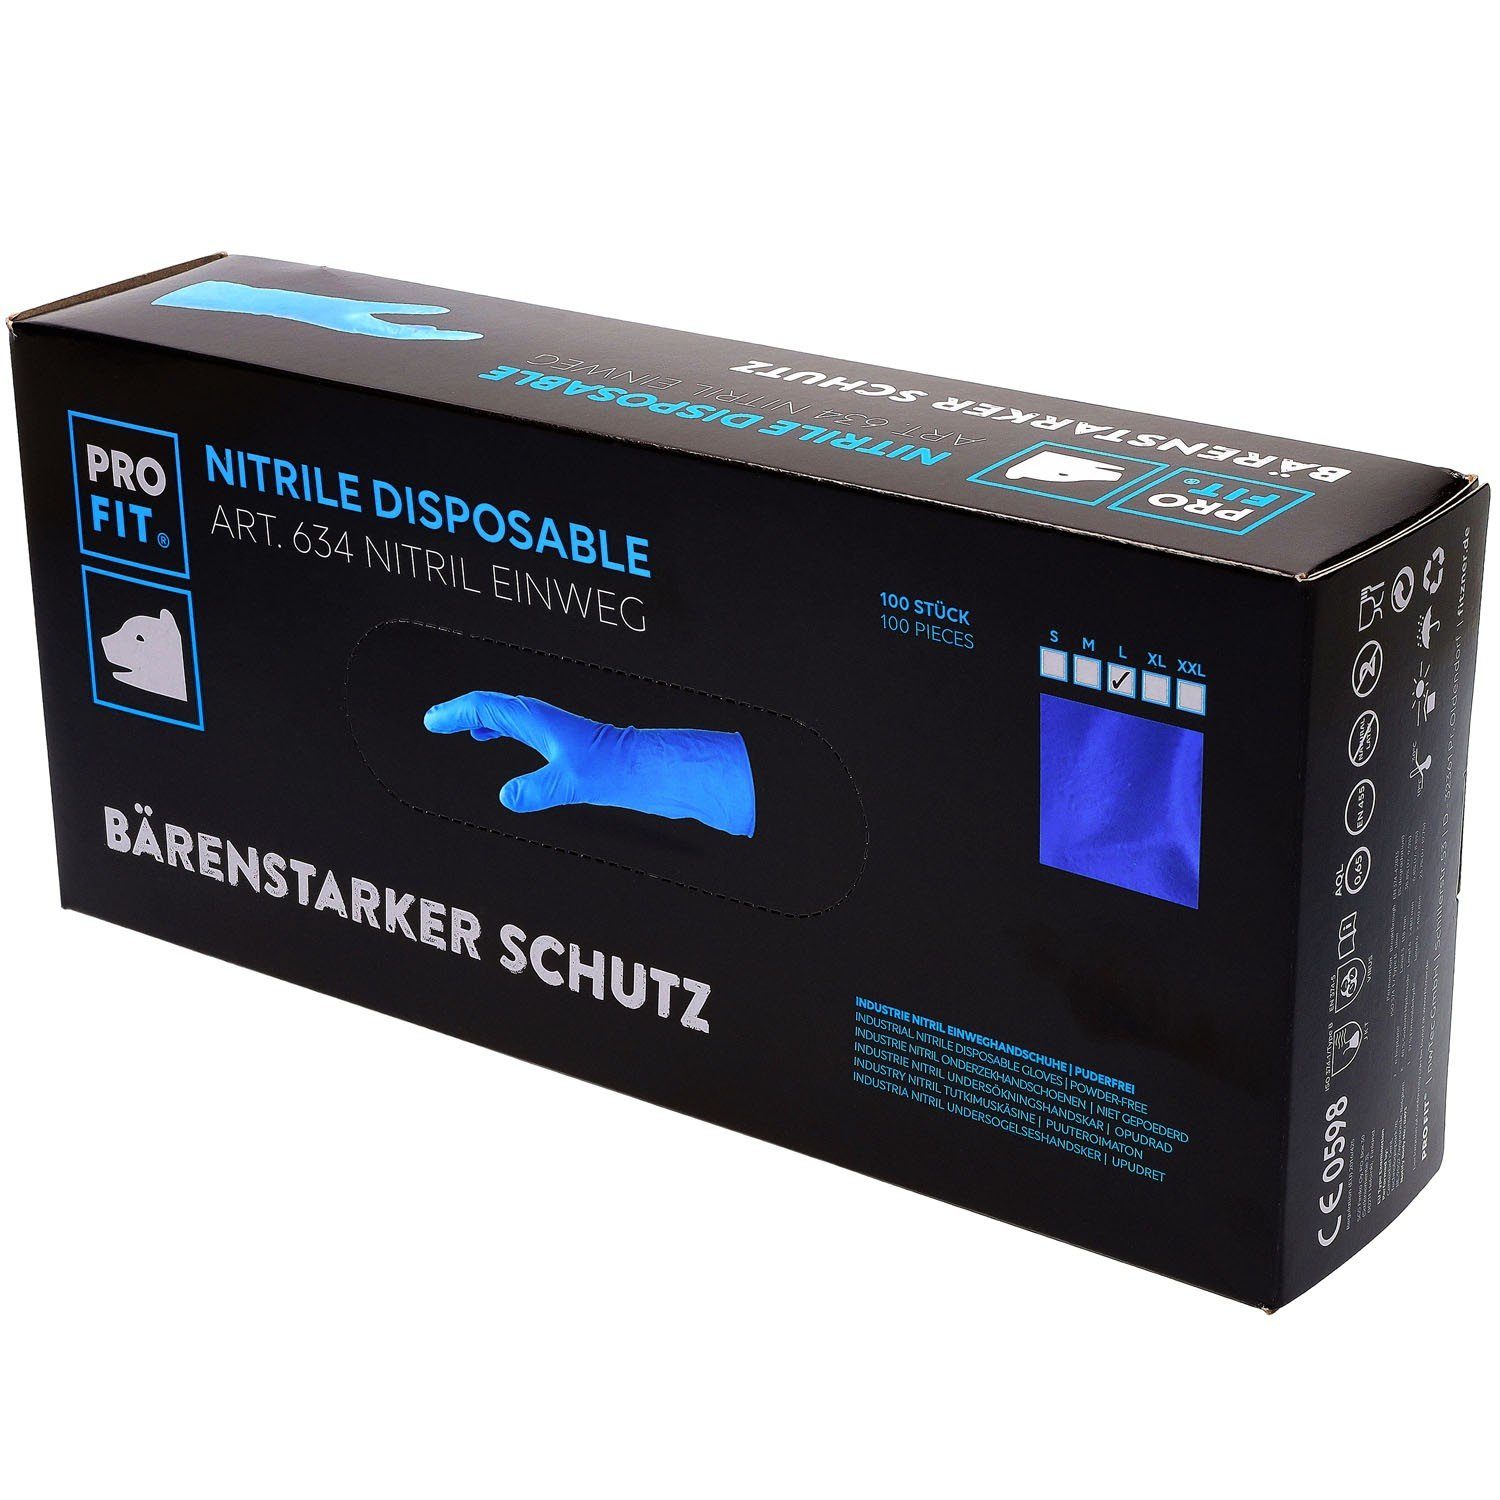 PRO FIT by Fitzner Einweghandschuhe pro 100 Box Nitril-Einweghandschuh, Stück